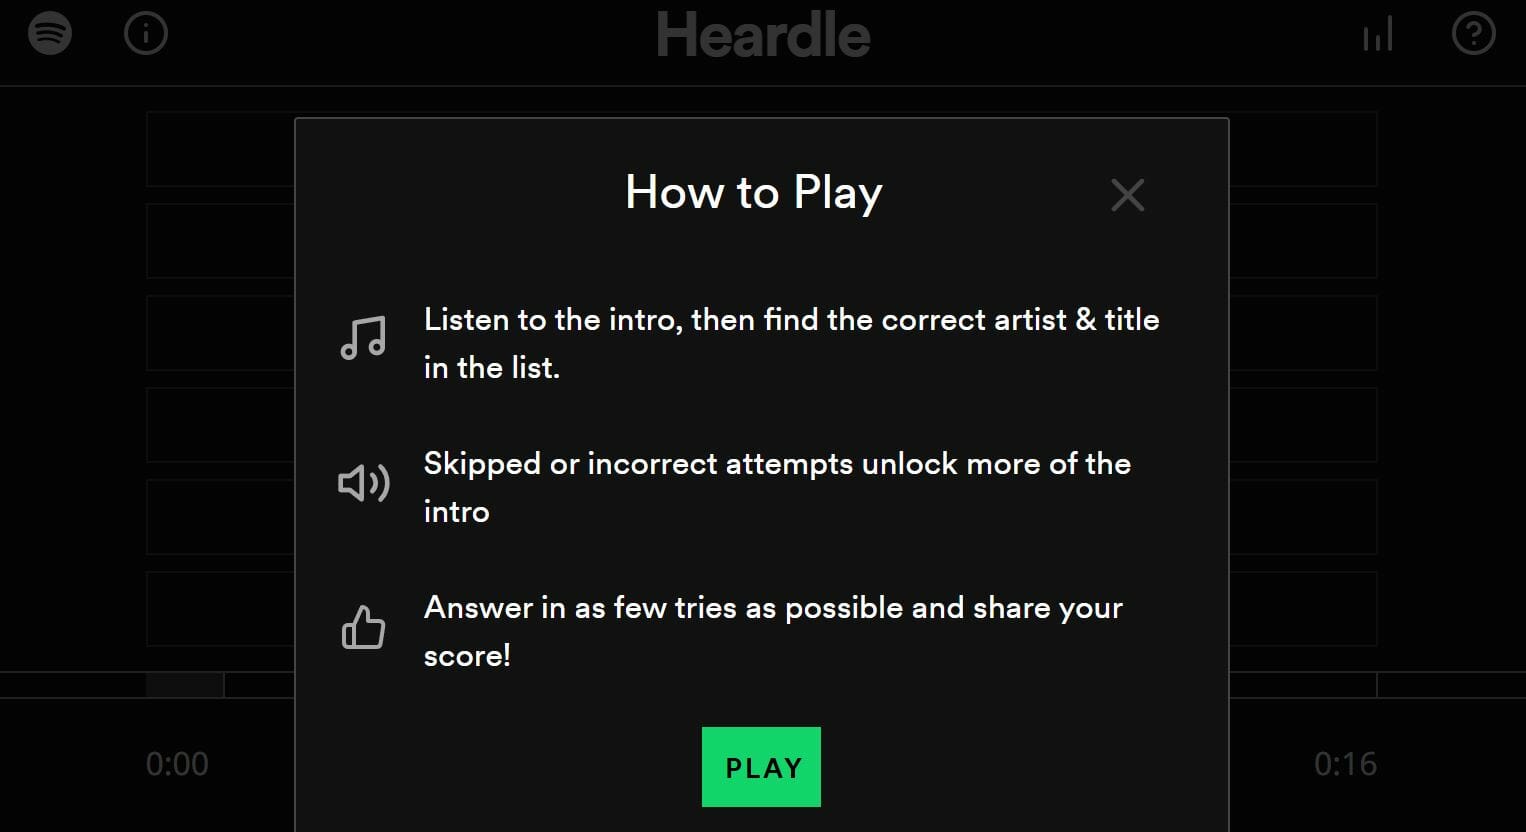 Heardle - How to Play